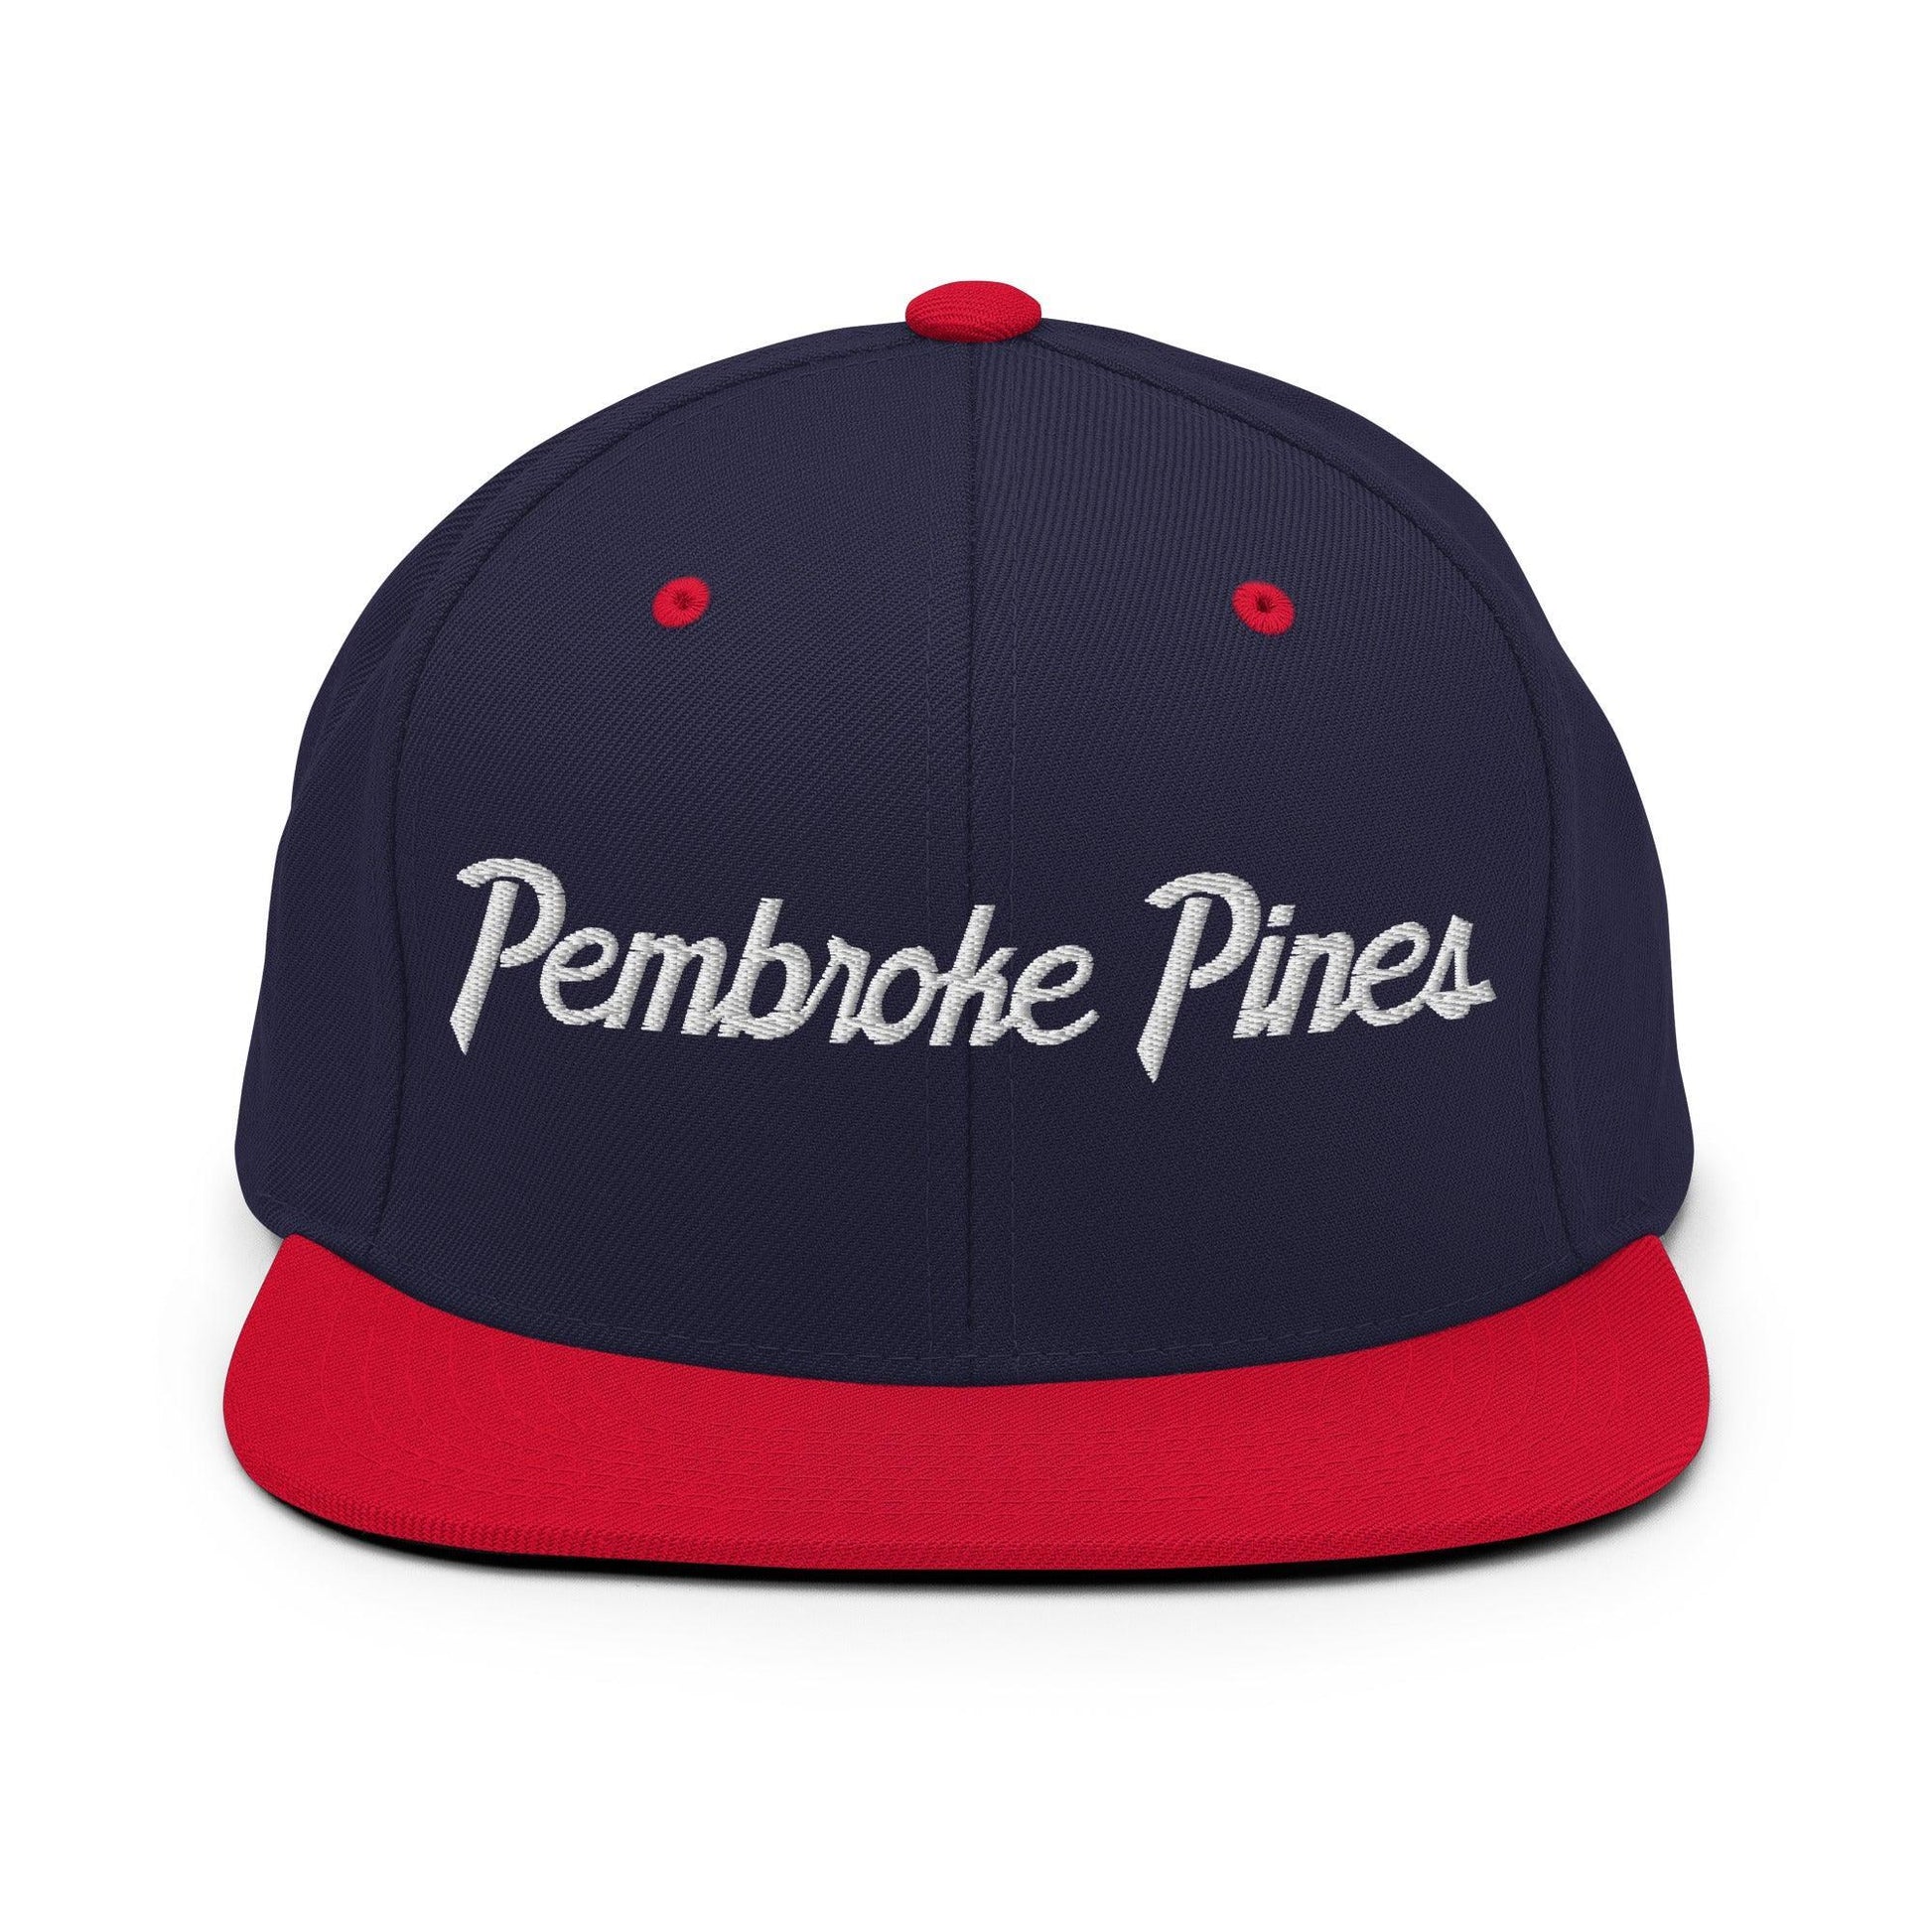 Pembroke Pines Script Snapback Hat Navy/ Red